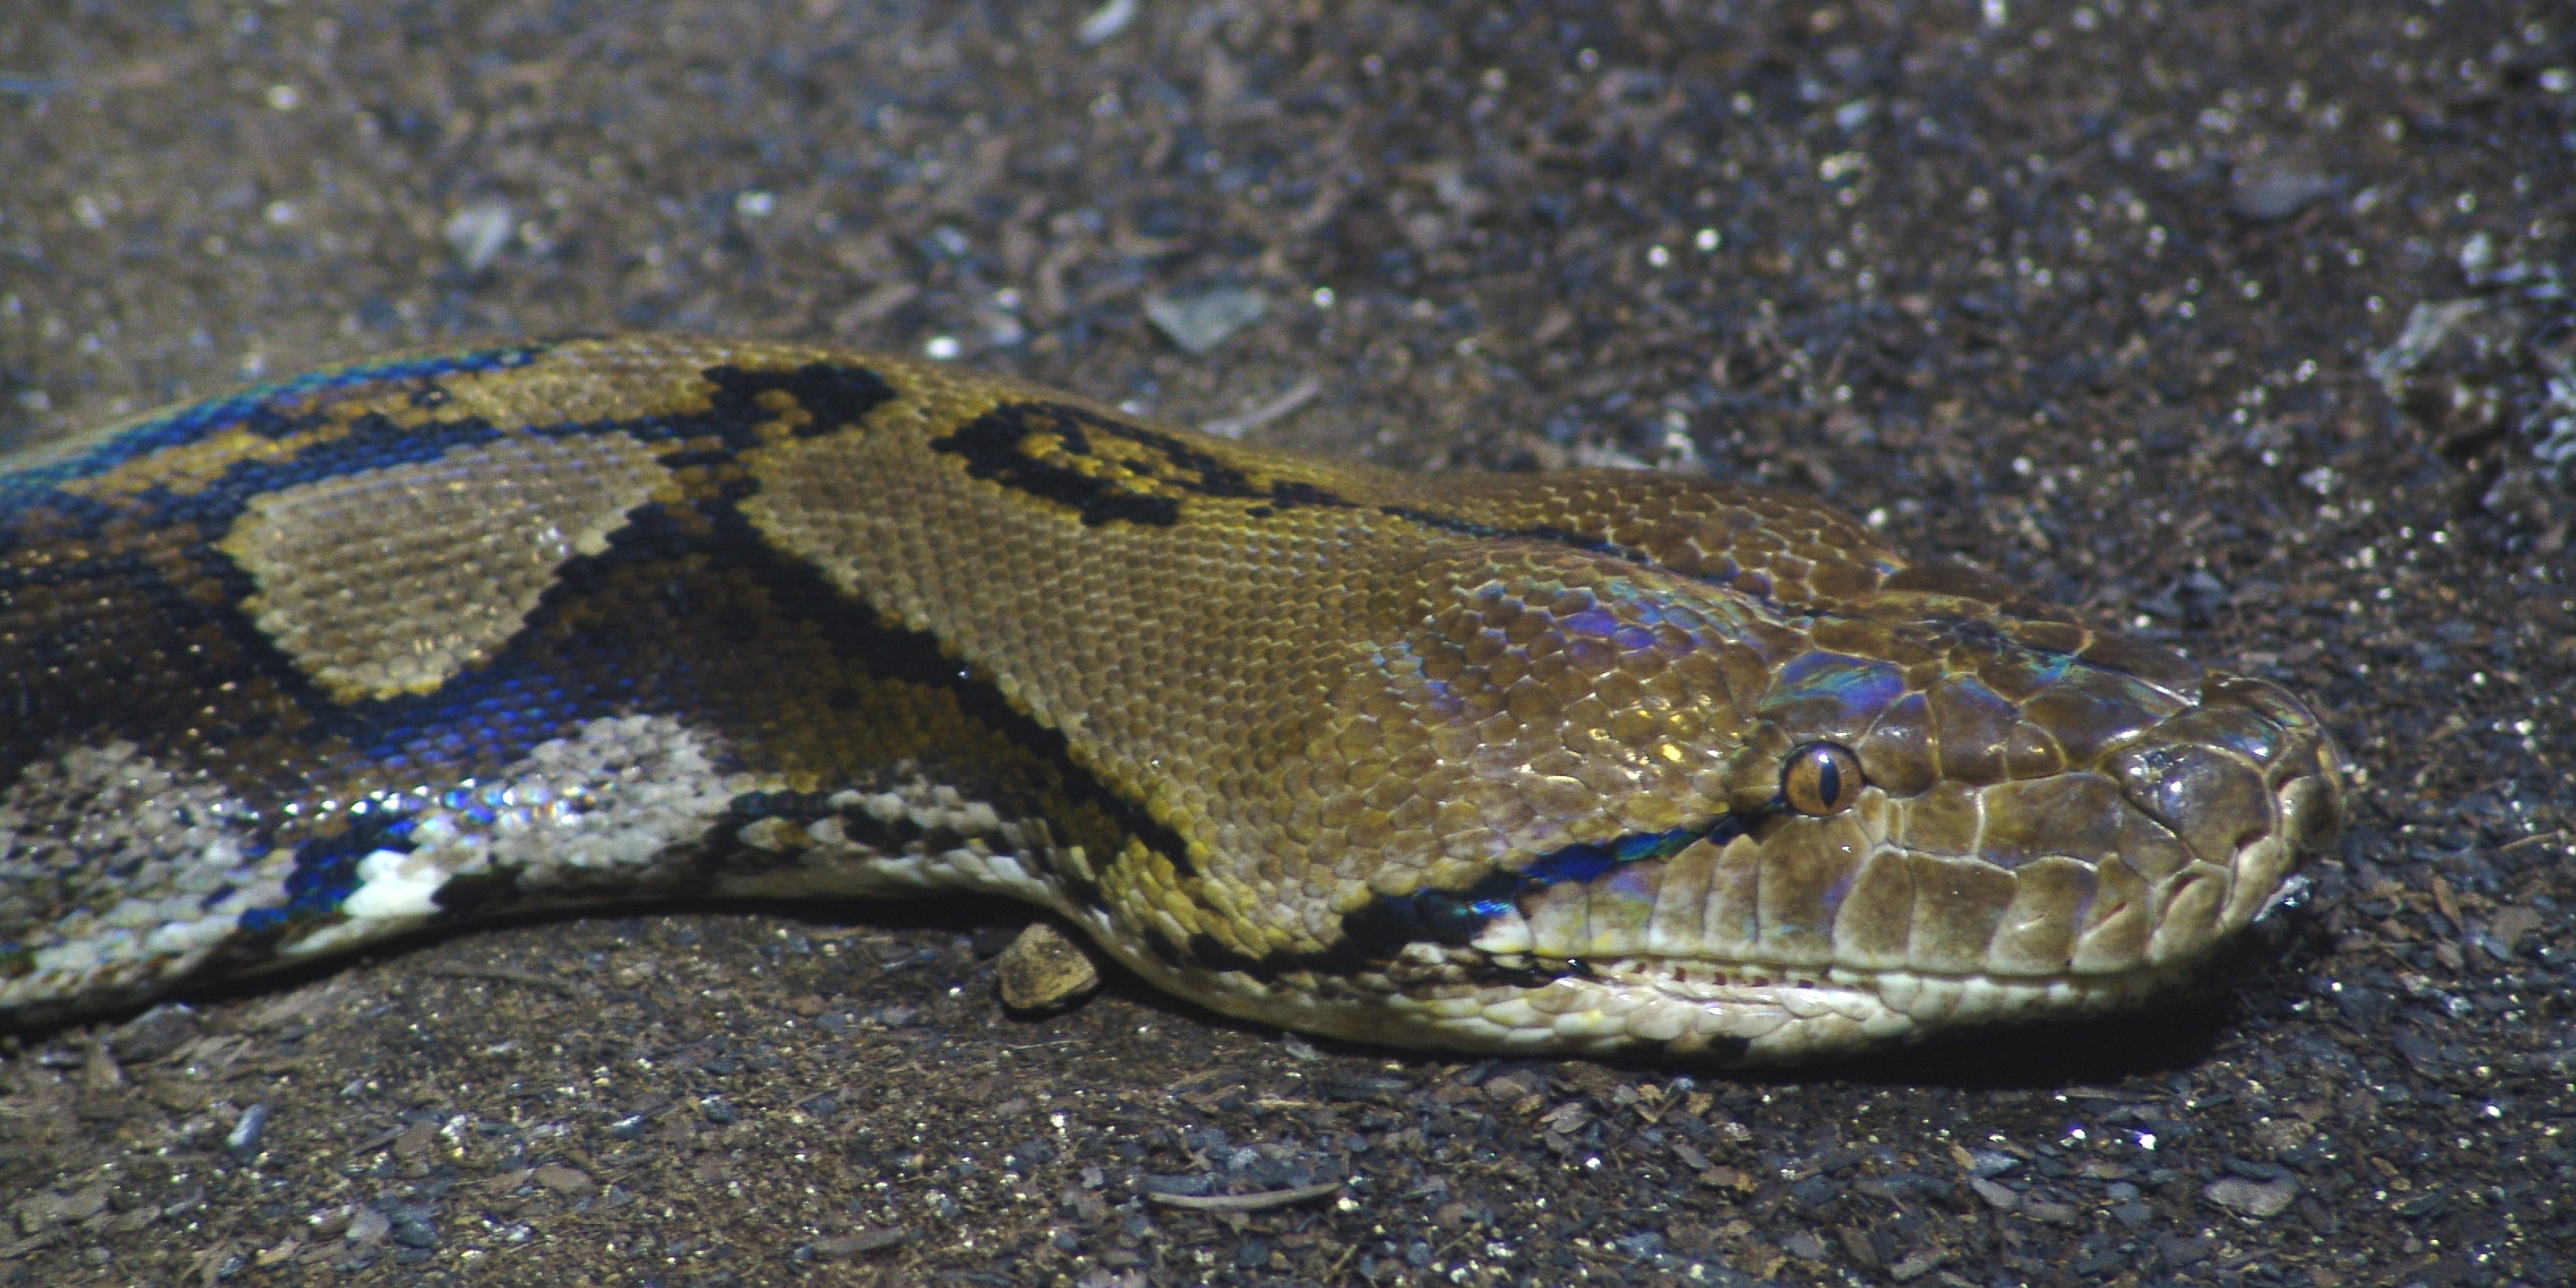 Reticulated python head